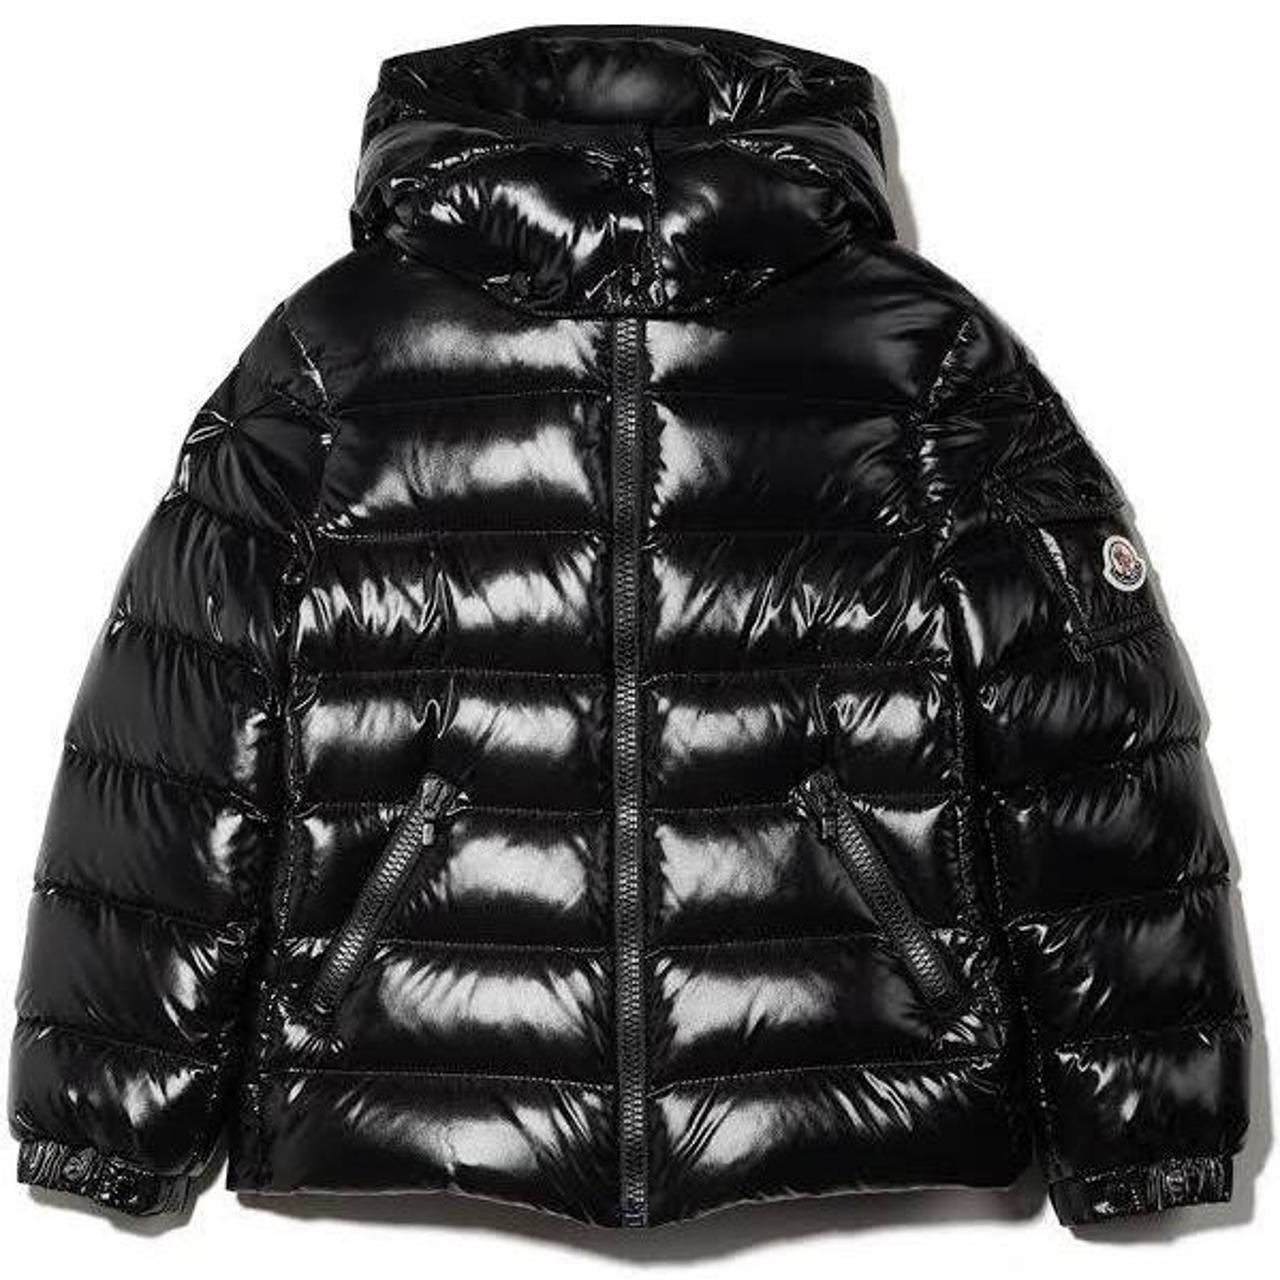 MONCLER Puffer jacket Kids size 10 ( fits a... - Depop